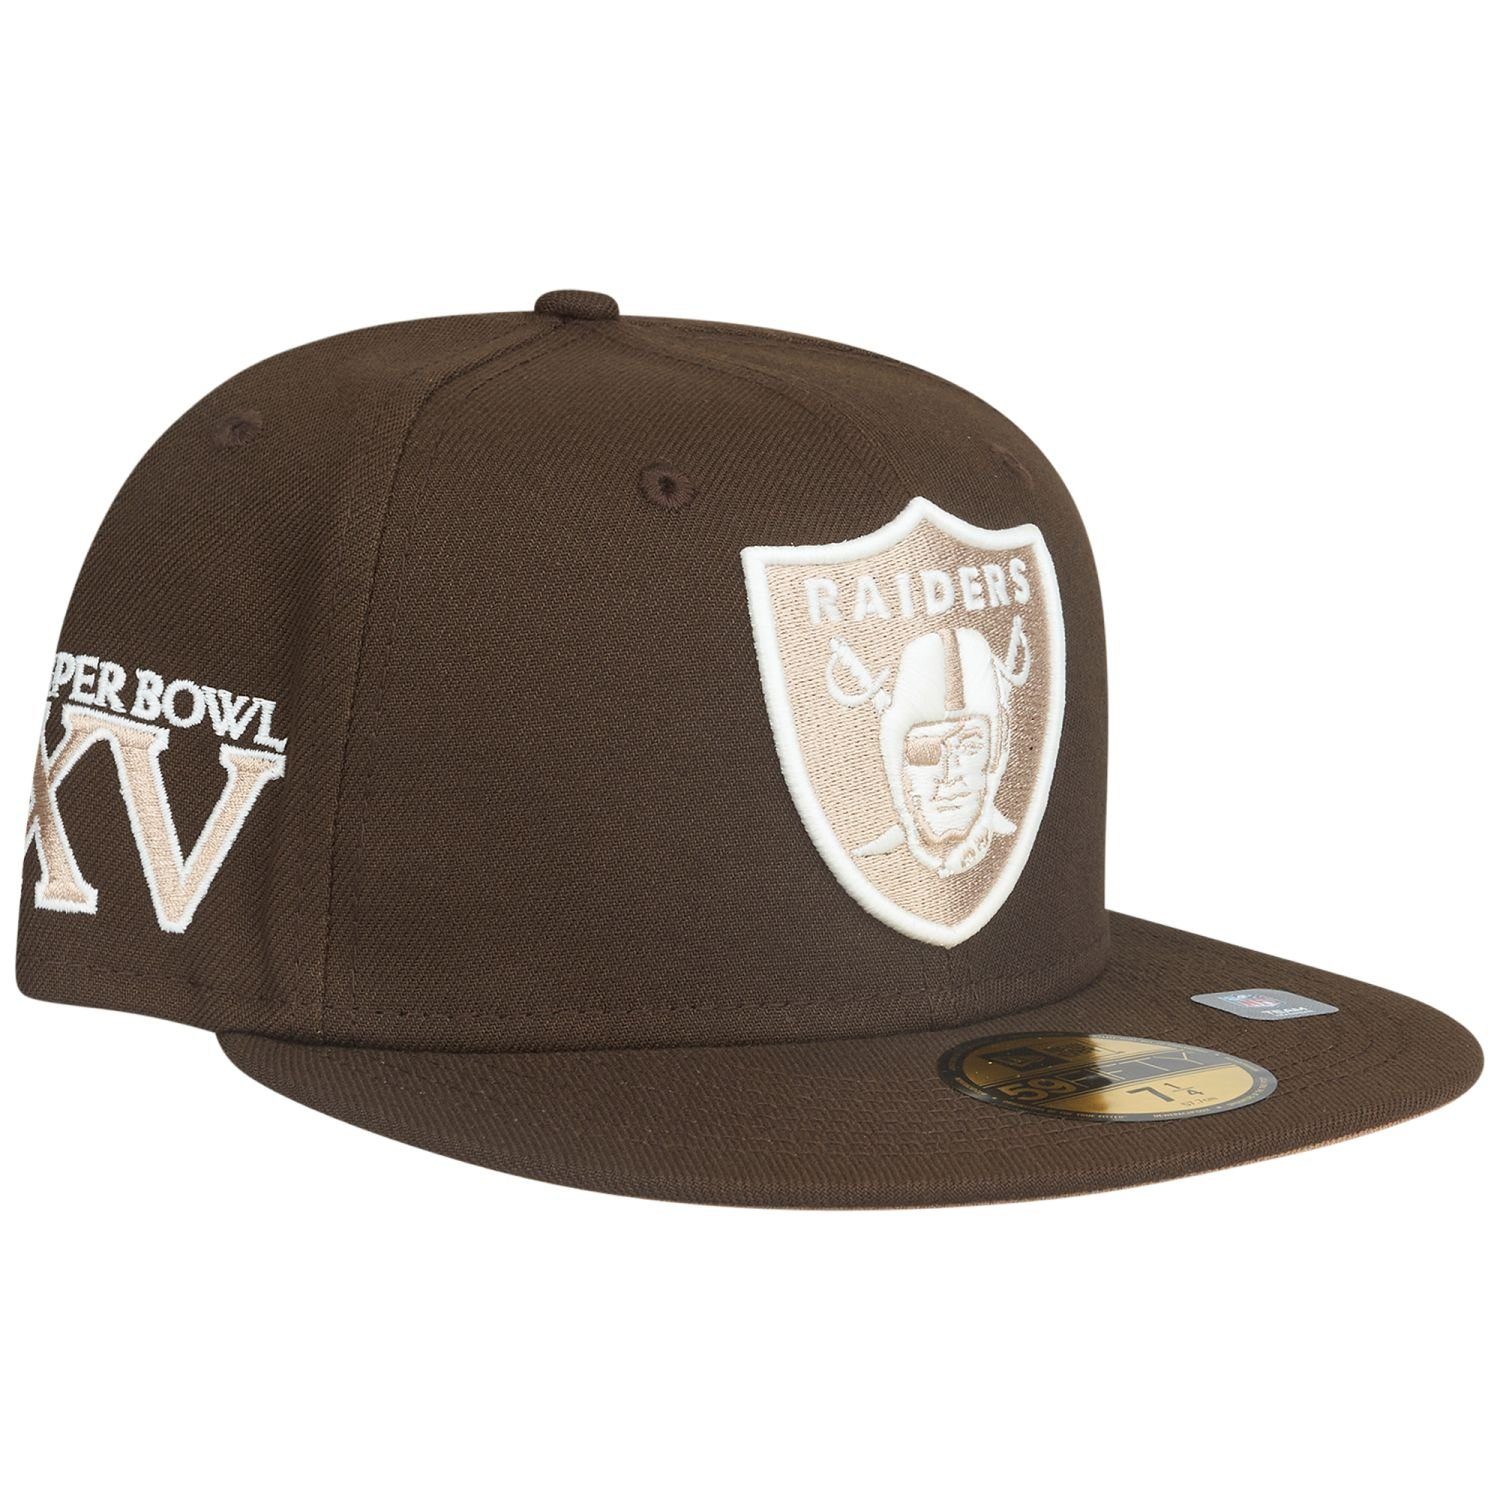 New Era Fitted Cap 59Fifty Vegas Raiders walnut Las